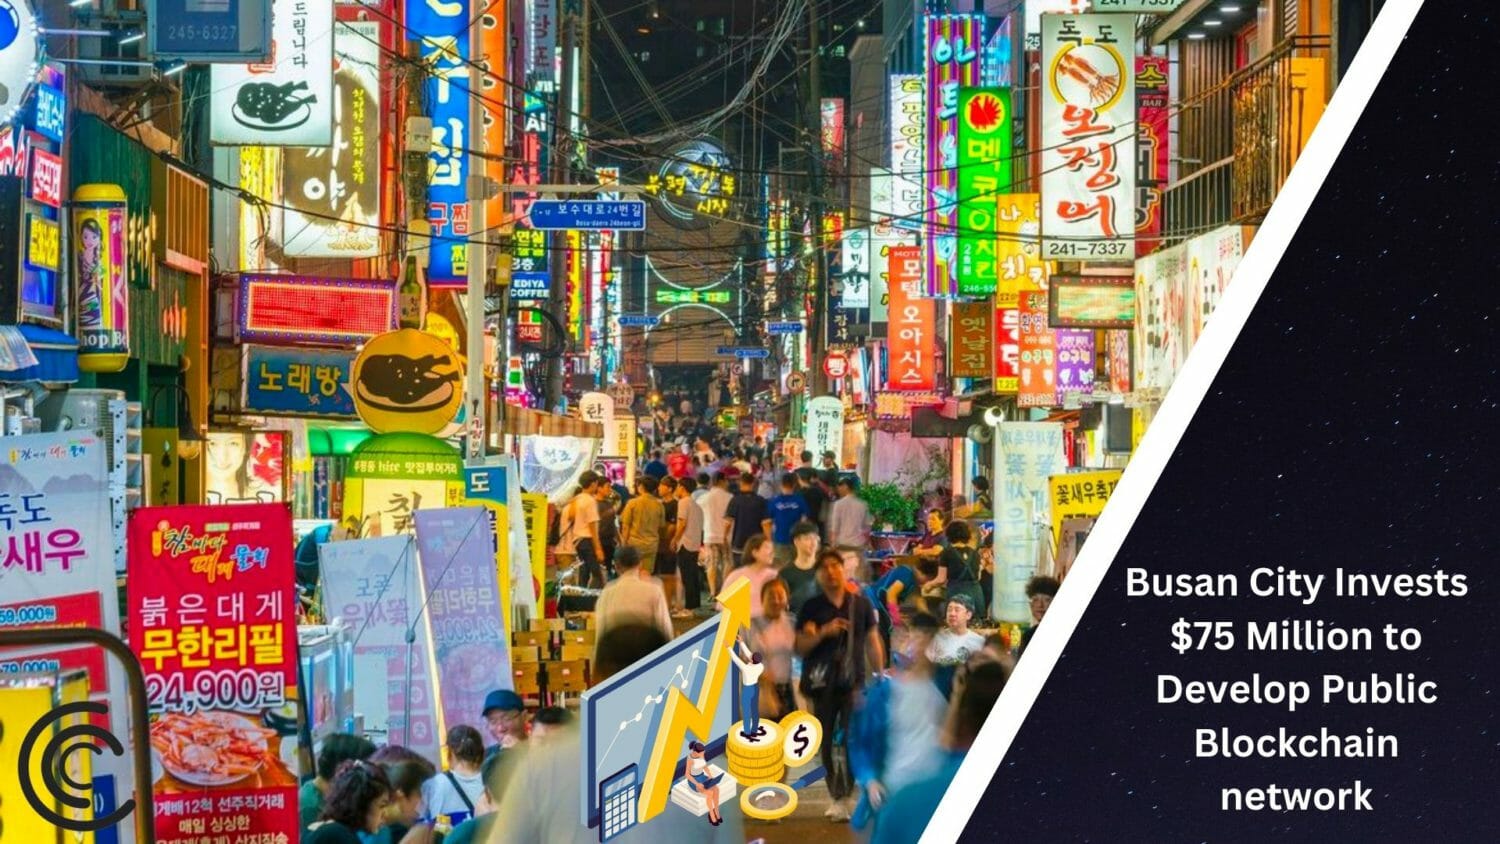 Busan City Invests $75 Million To Develop Public Blockchain Network